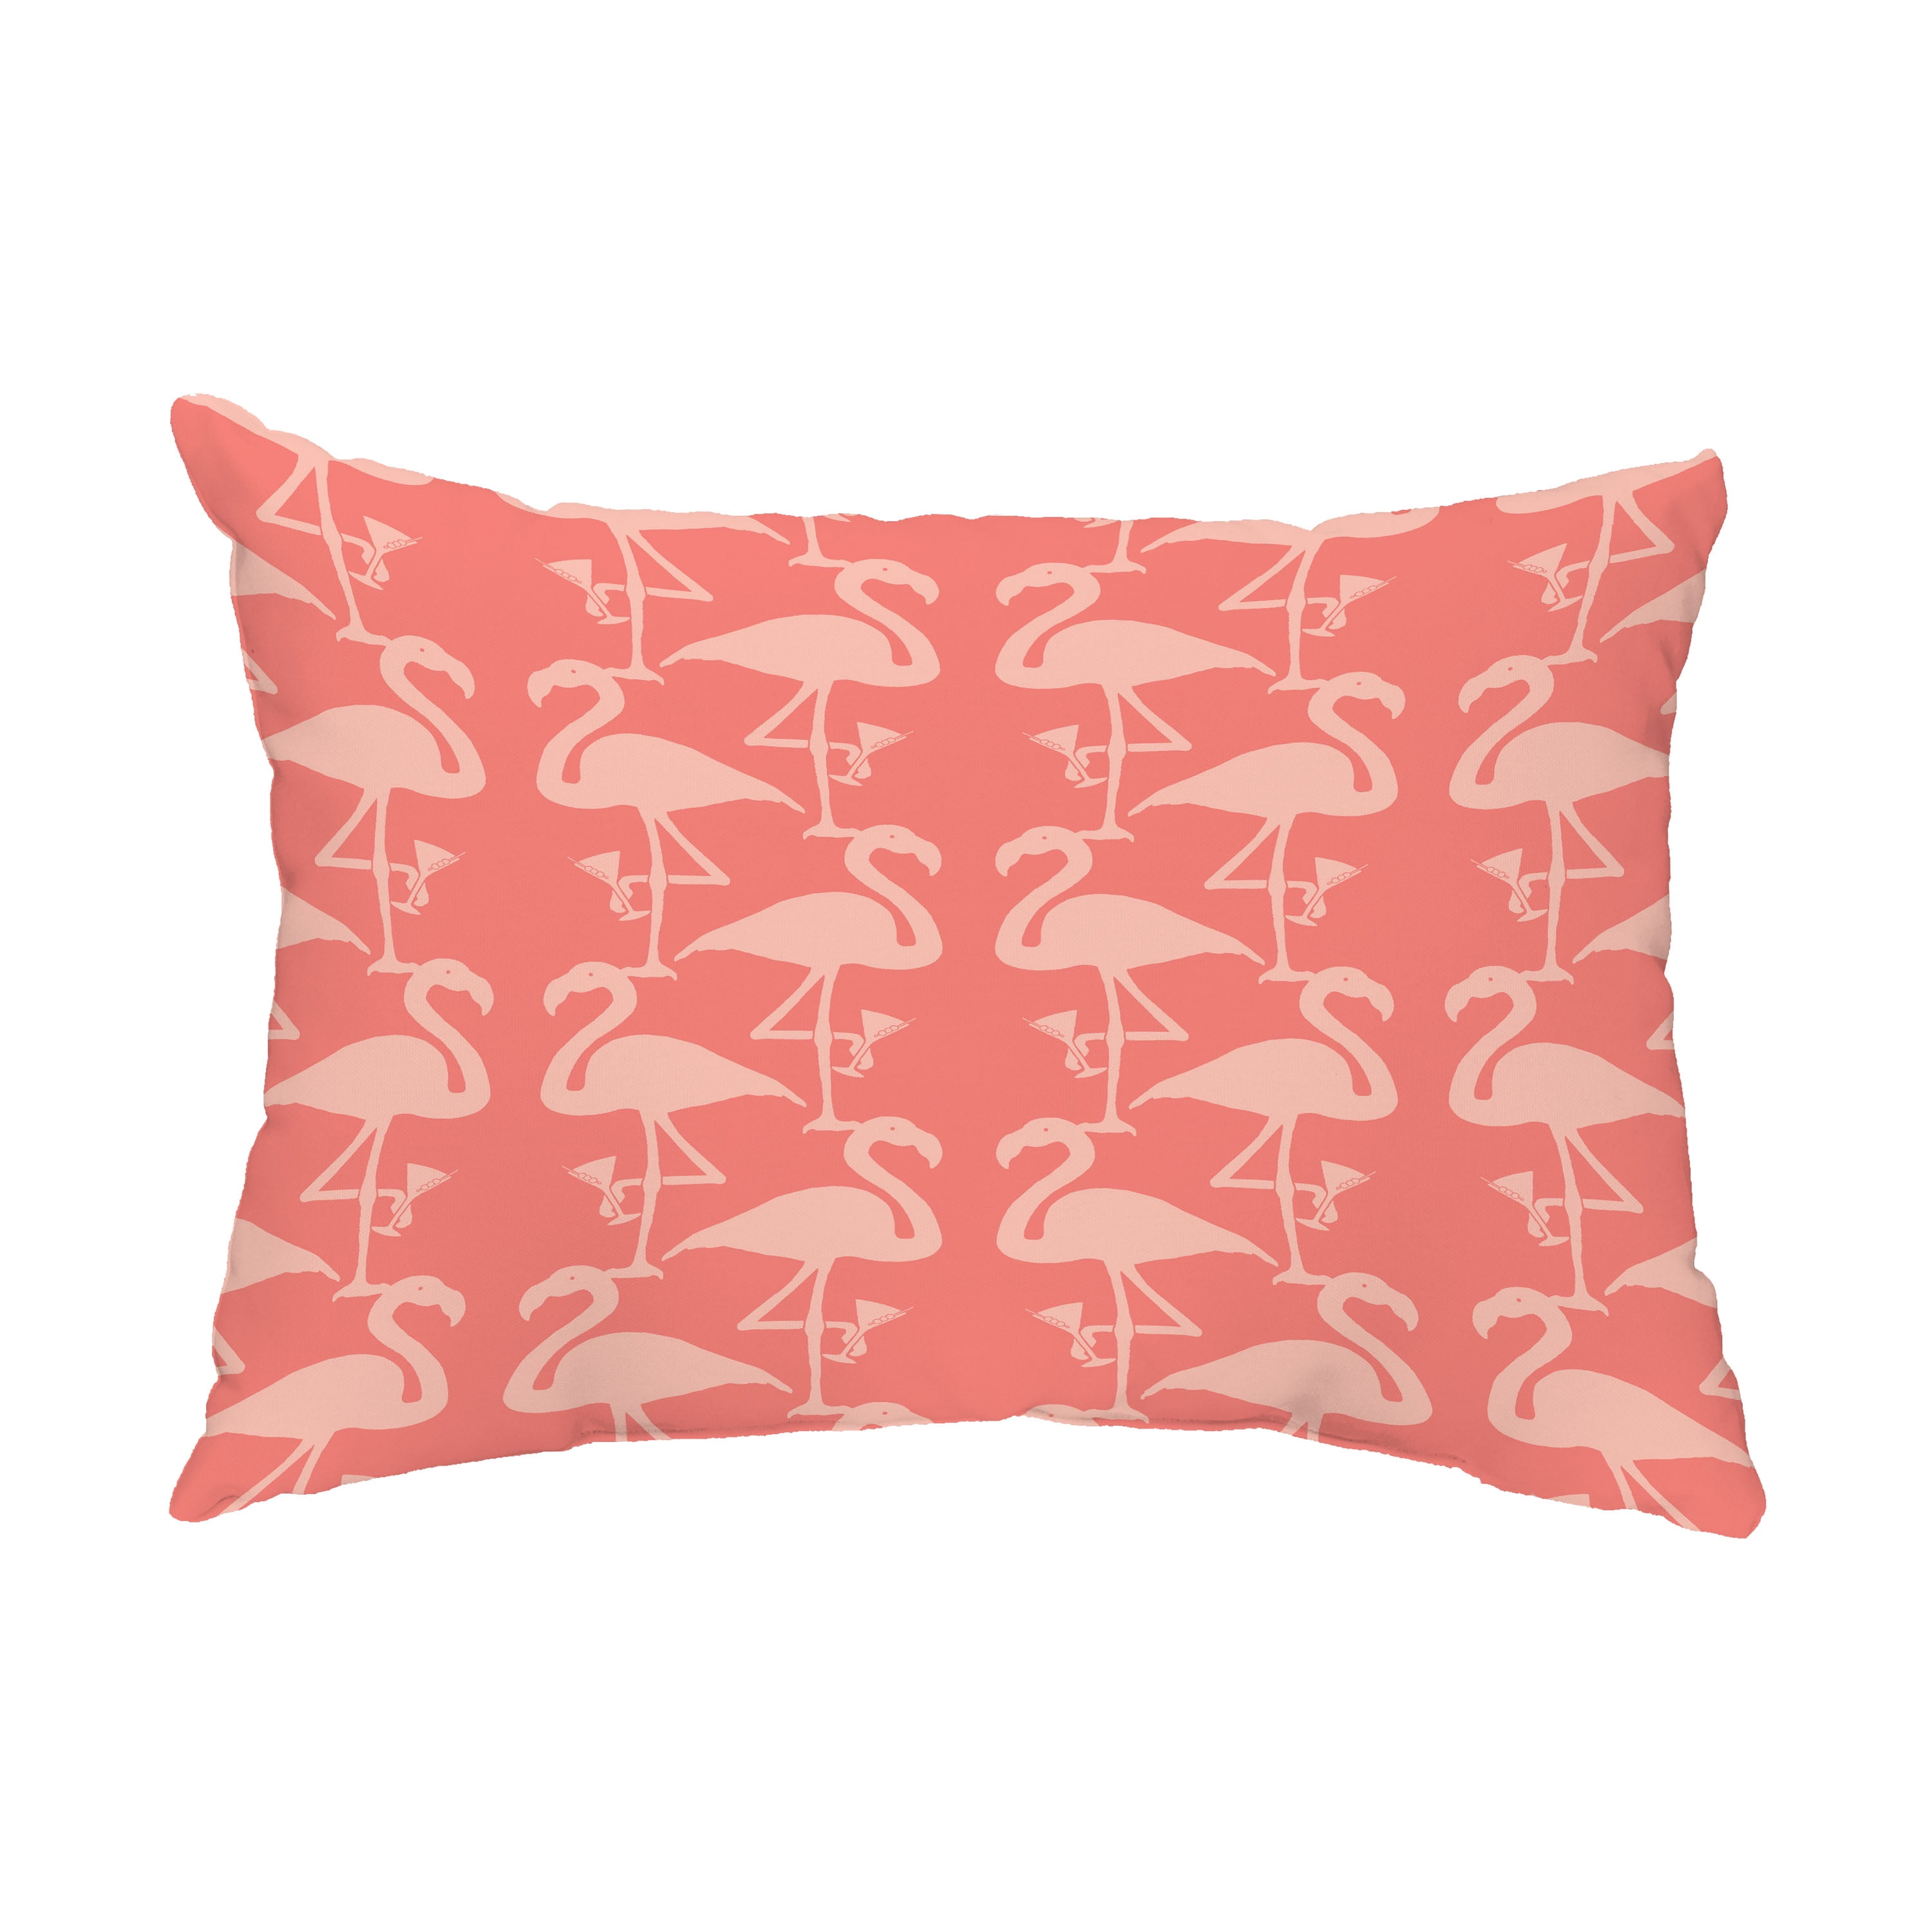 The Pillow Collection Haya Animal Print Pink Down Filled Throw Pillow